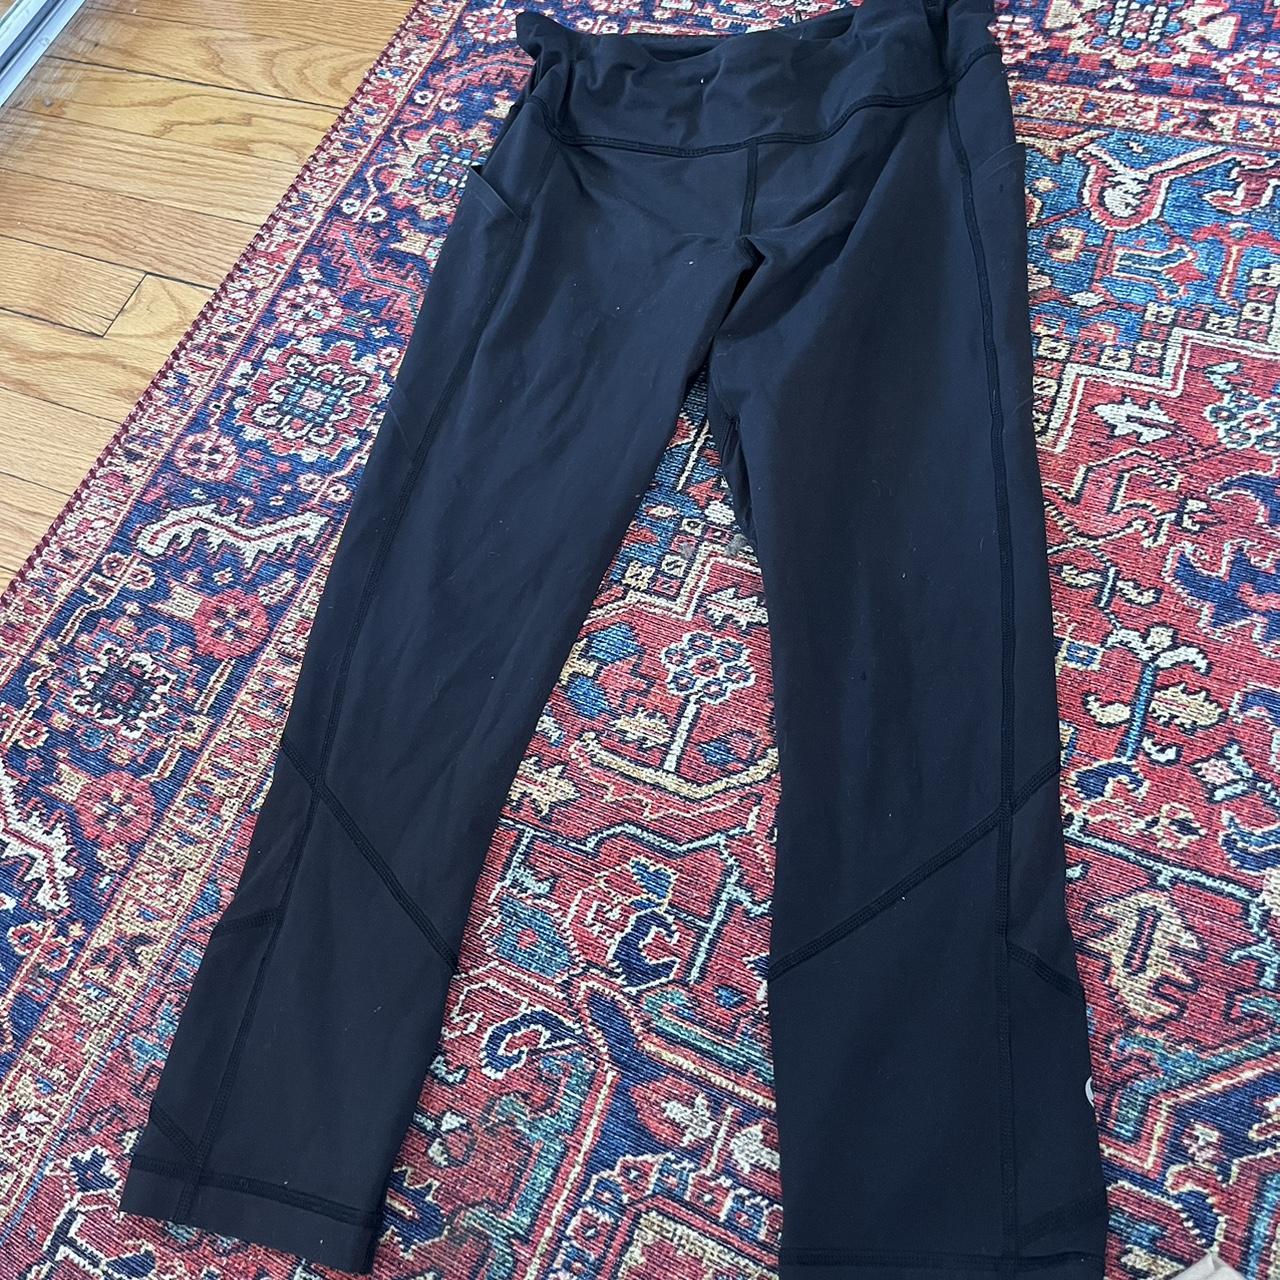 Lululemon capri leggings in size 6, black with blue - Depop